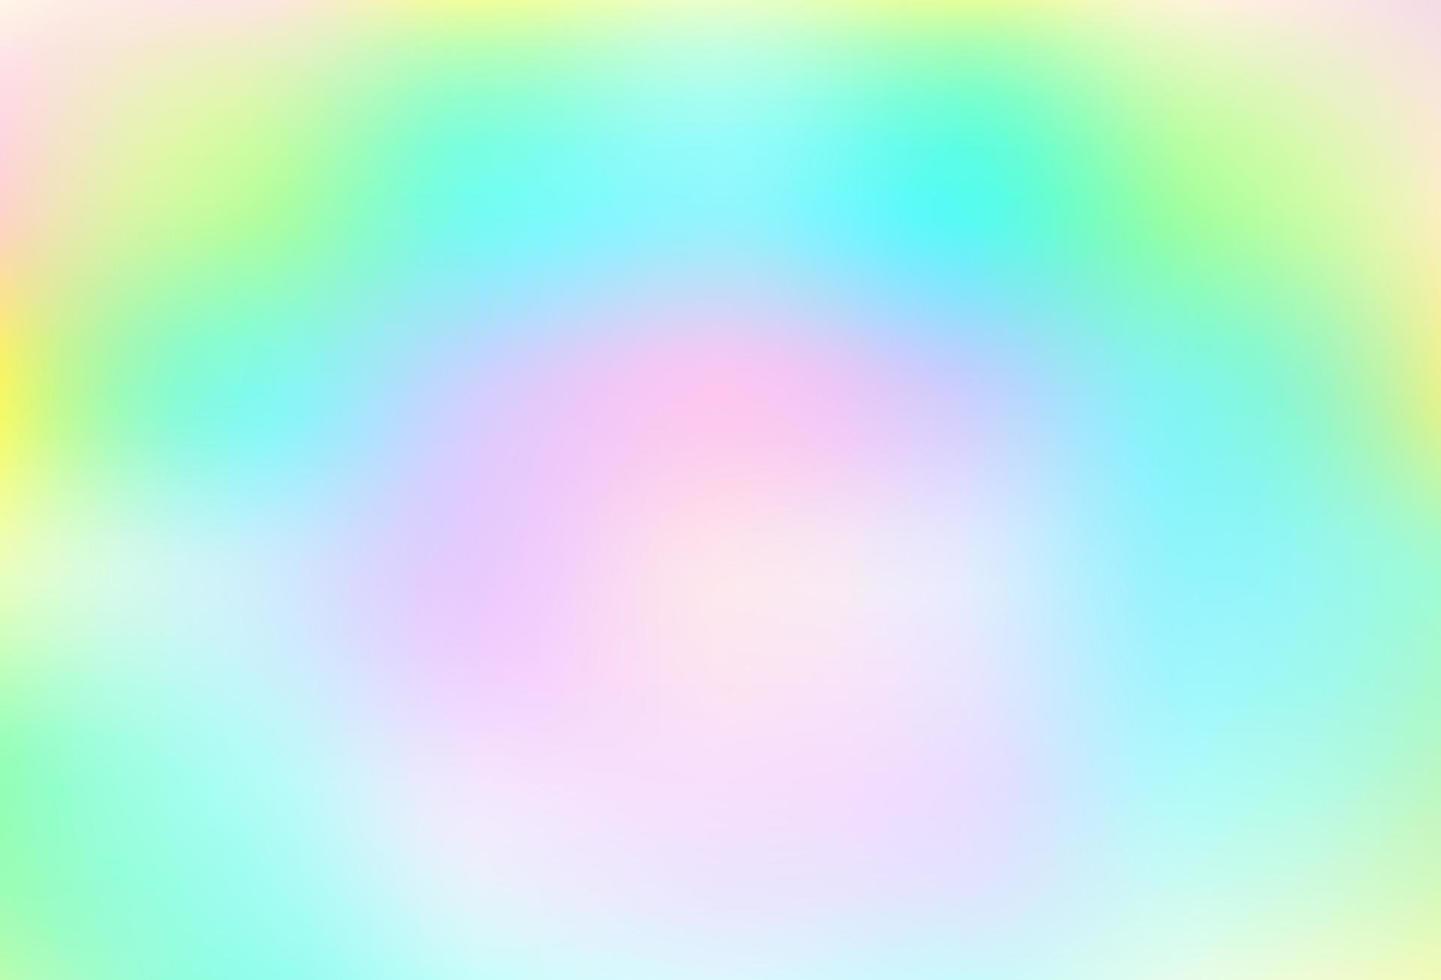 luz multicolor, padrão de bokeh abstrato de vetor de arco-íris.